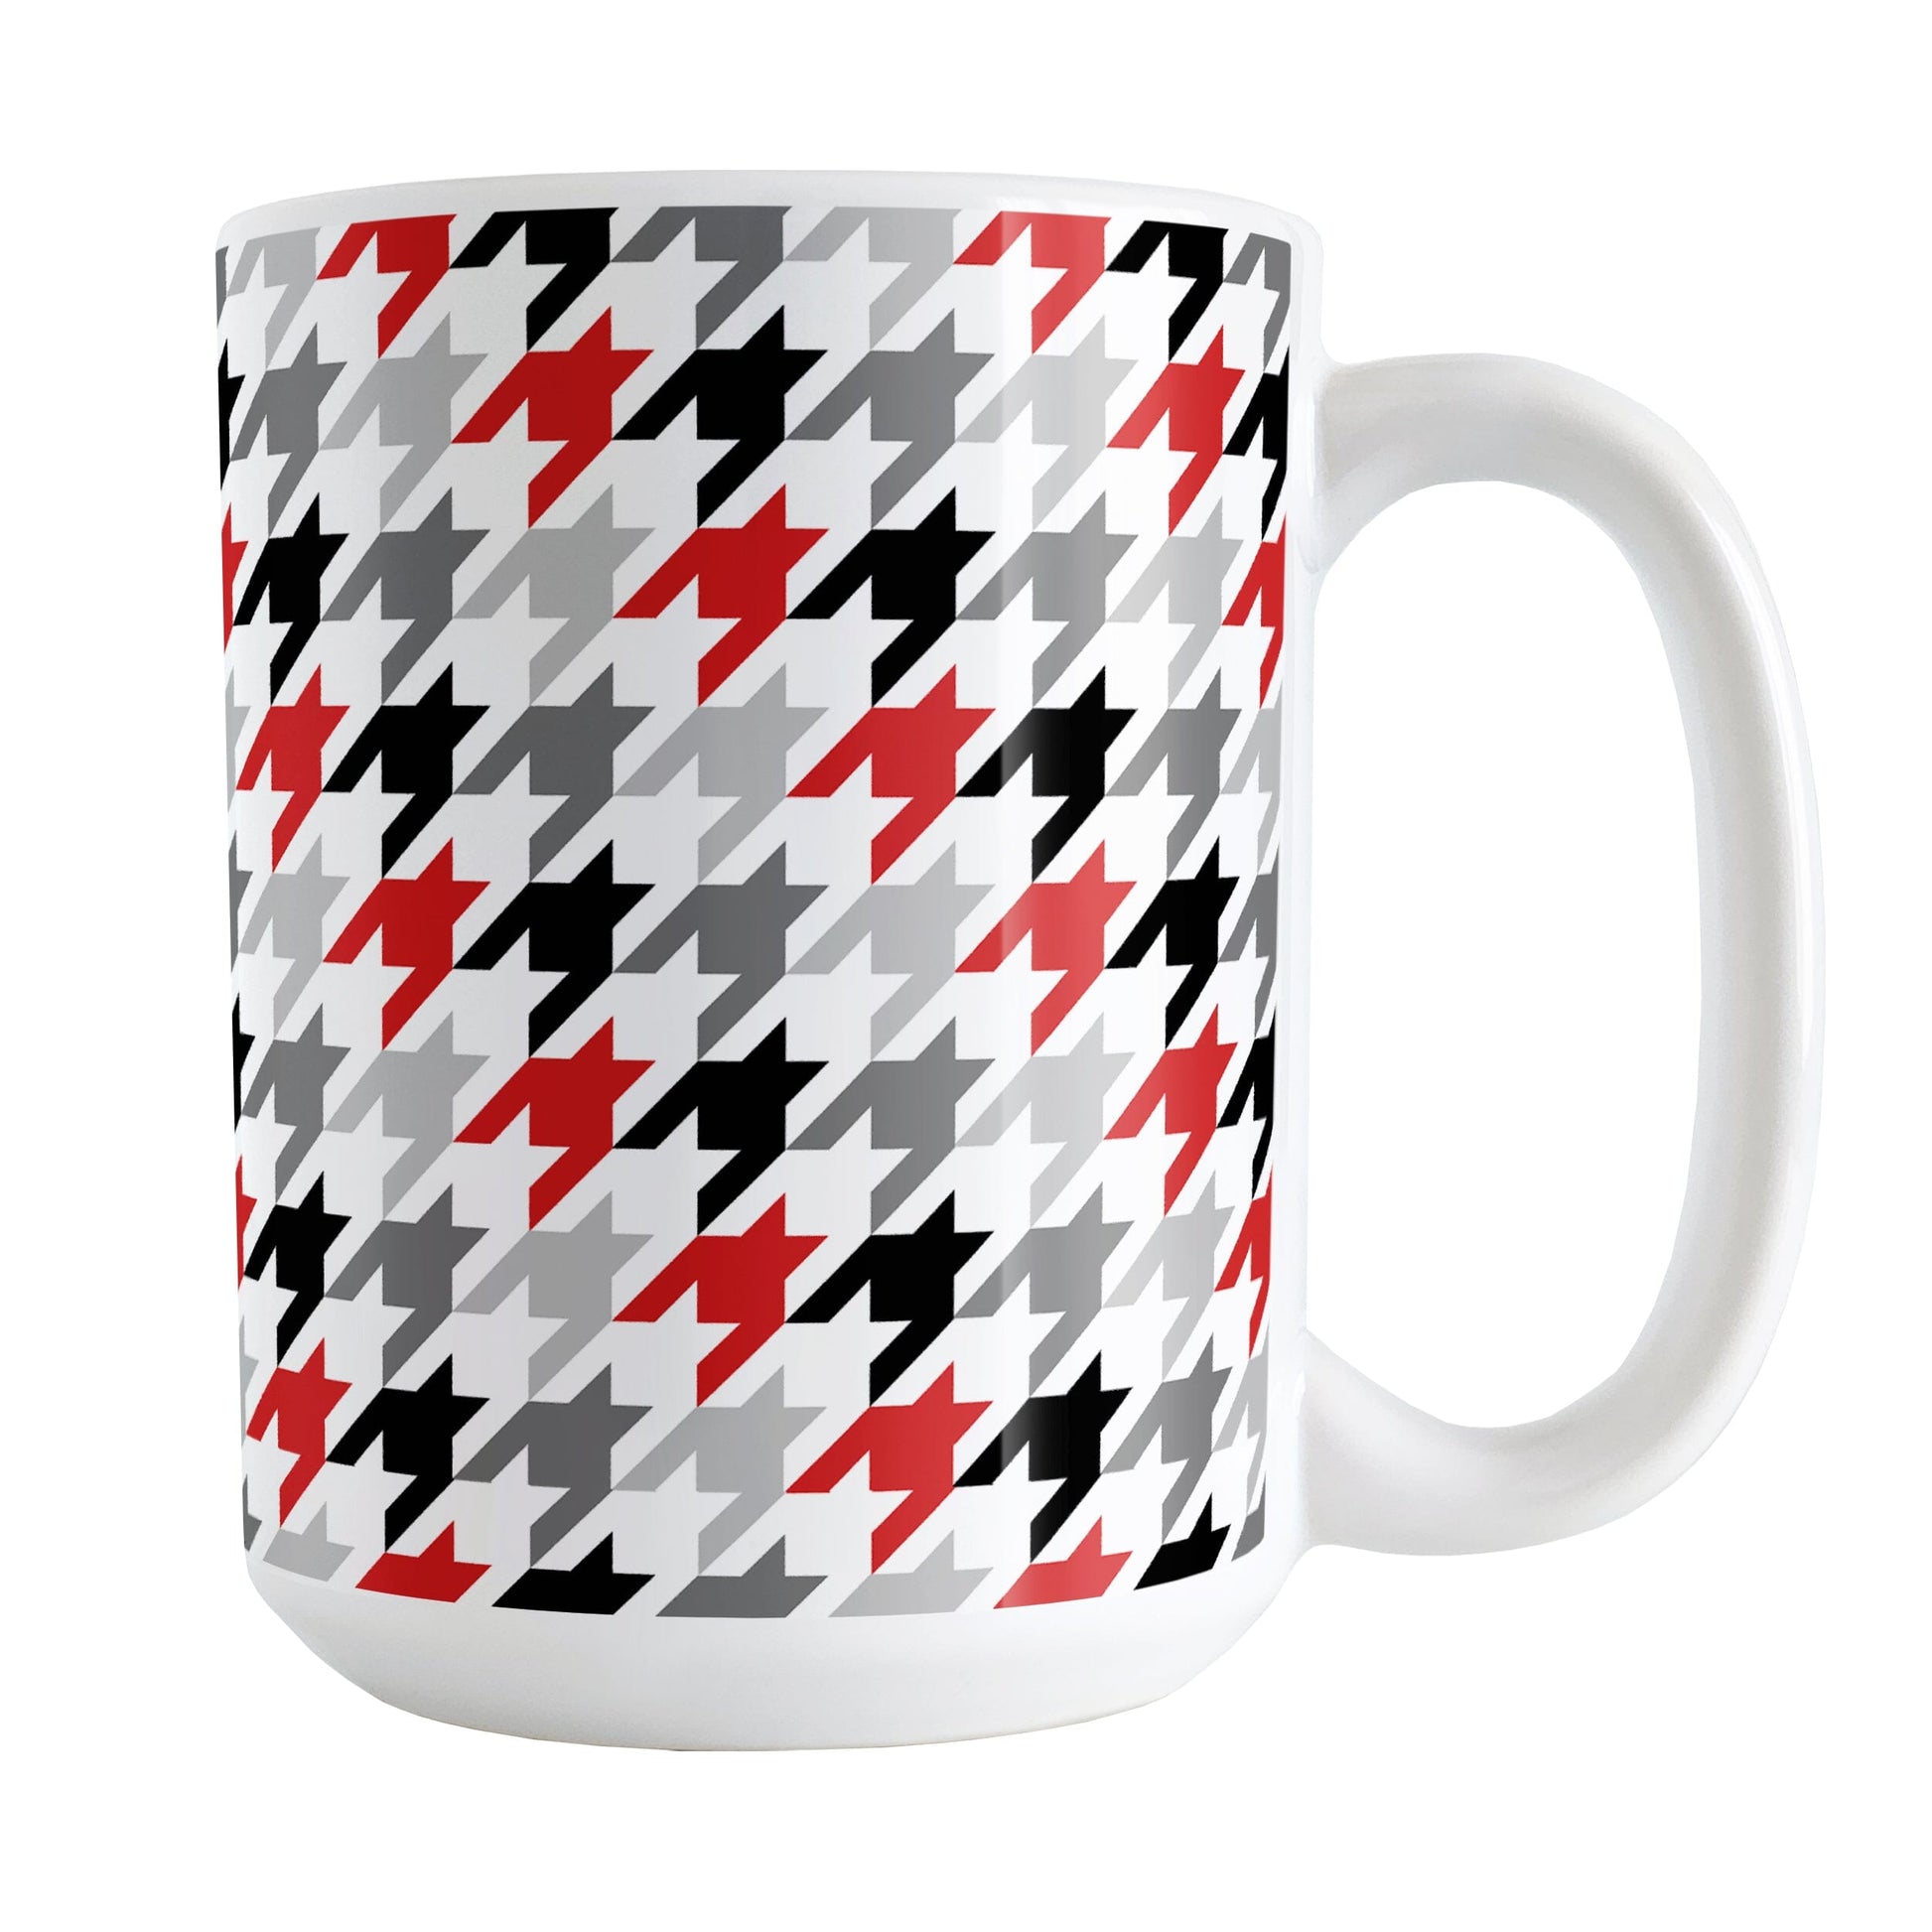 Black Gray Red Houndstooth Mug (15oz) at Amy's Coffee Mugs. A ceramic coffee mug designed with a houndstooth or dogtooth pattern in a black, gray, and red color progression that wraps around the mug to the handle.